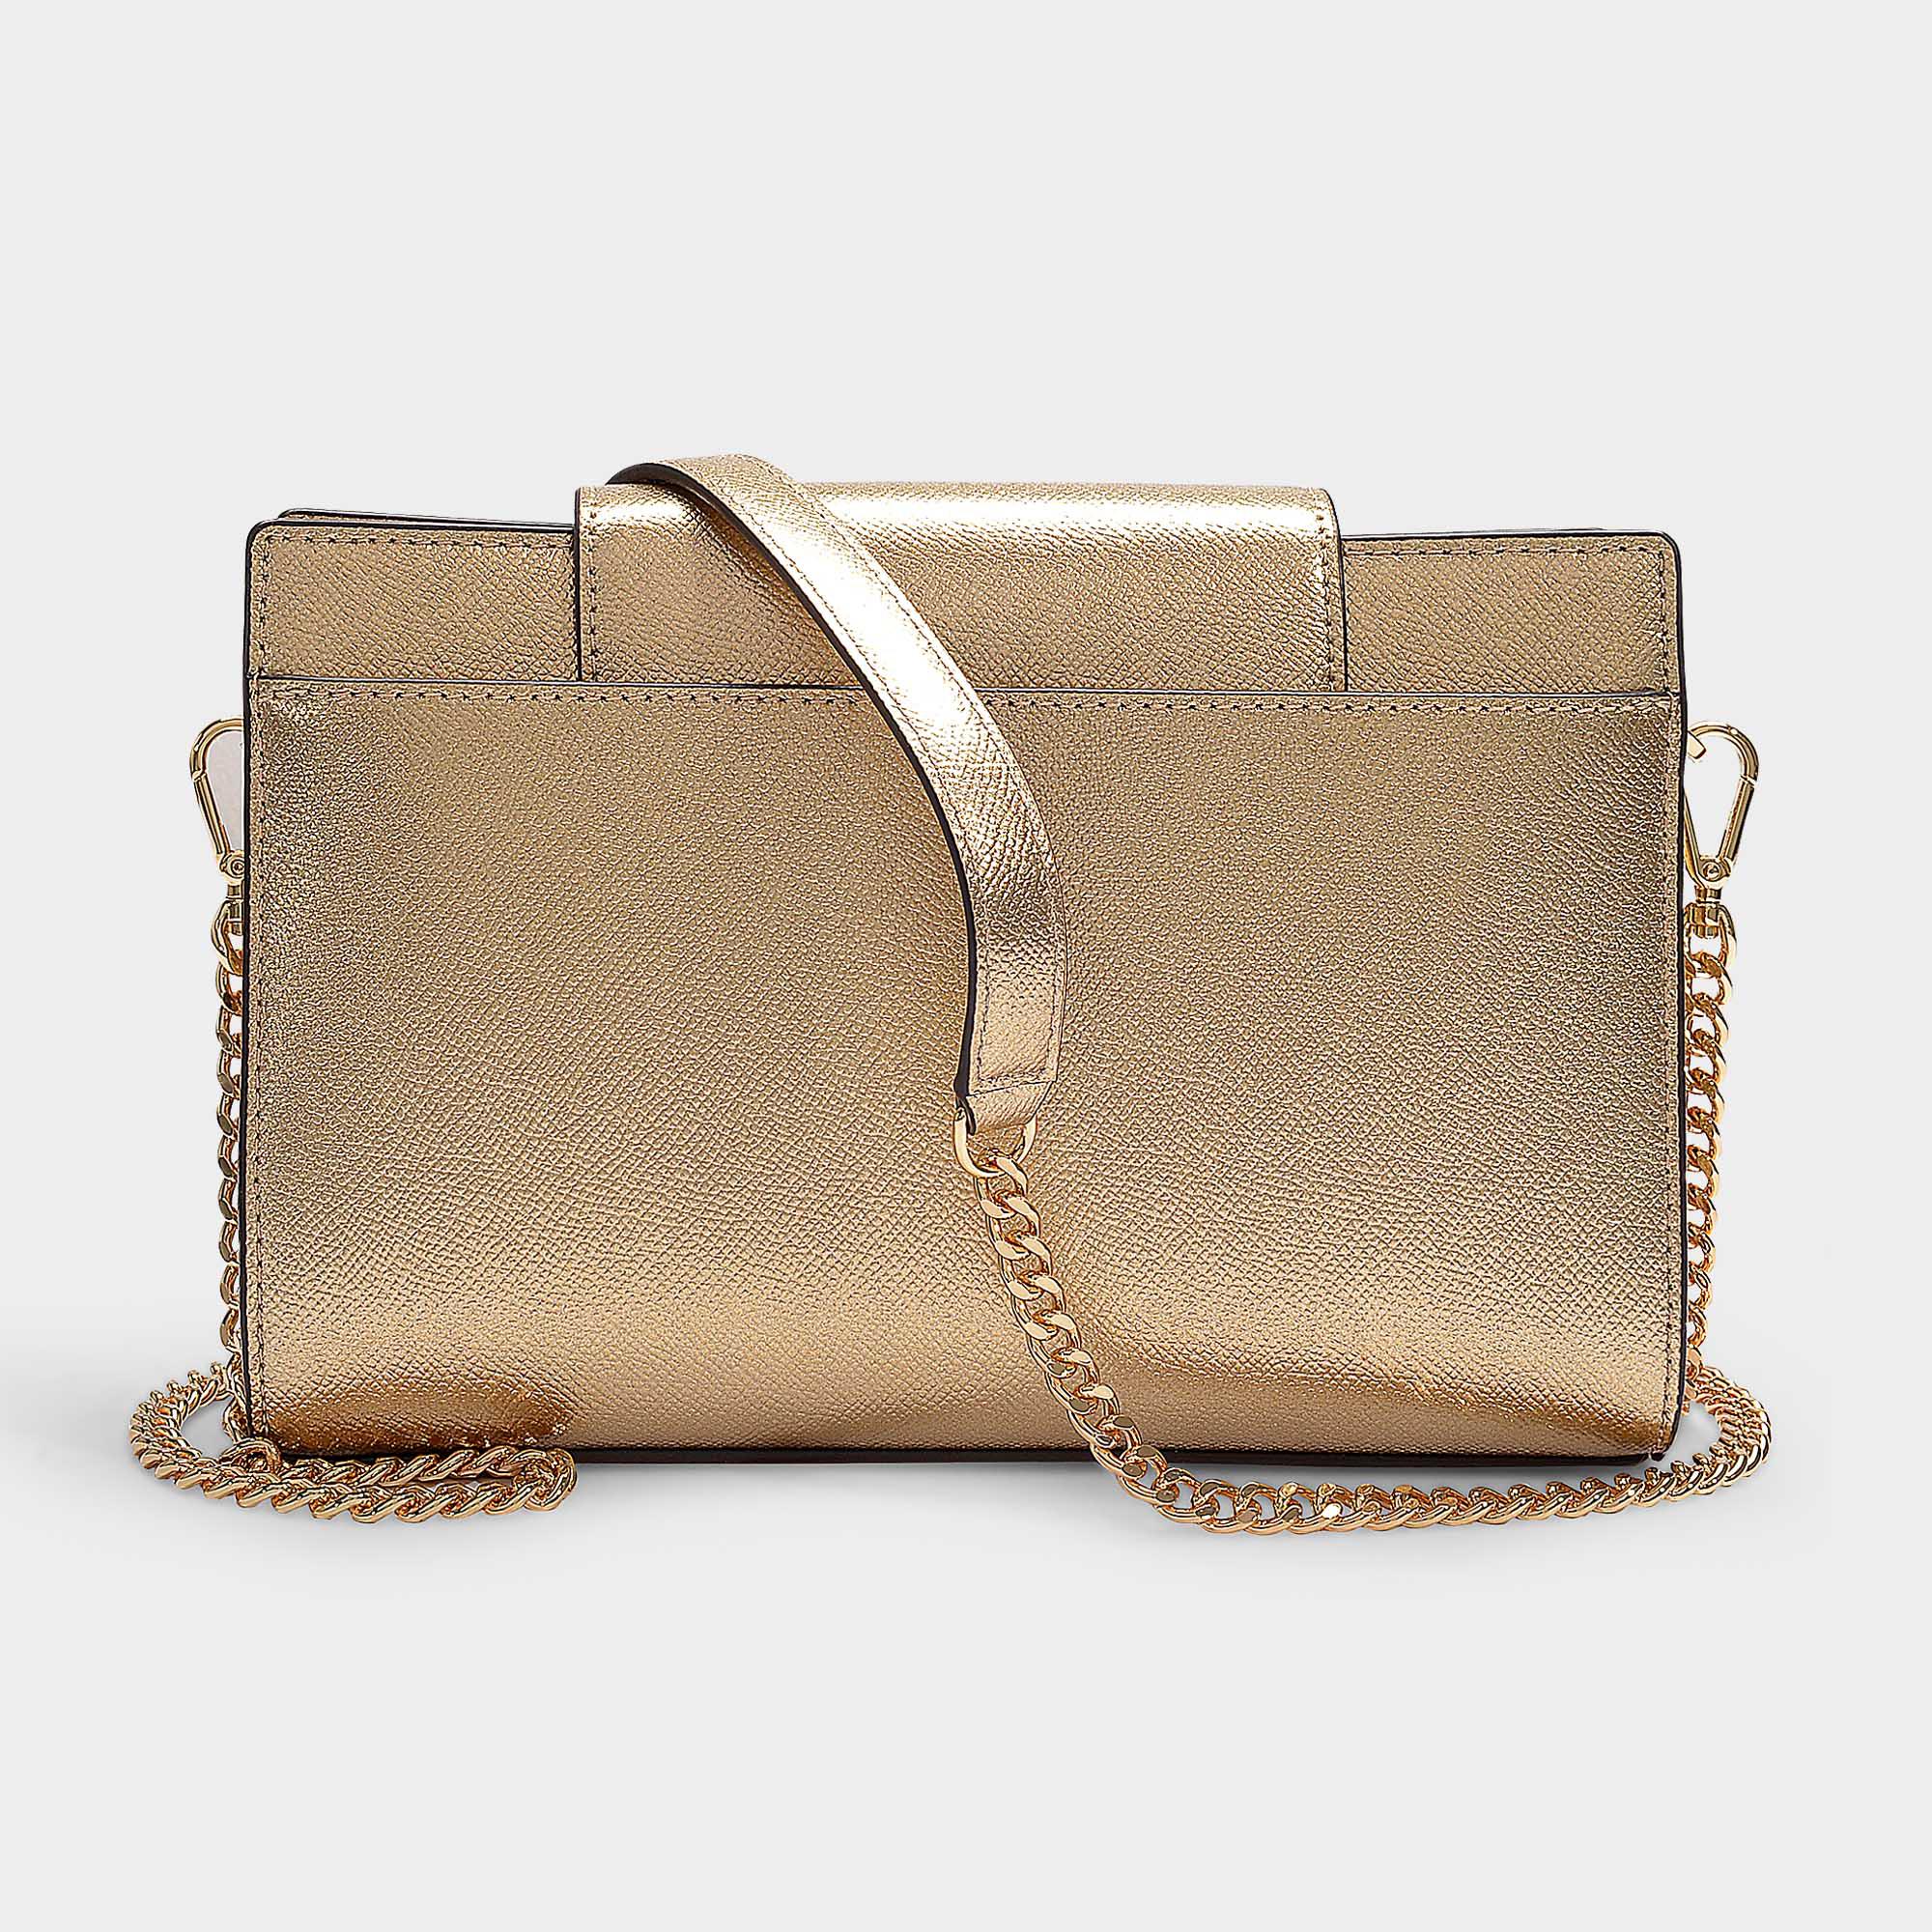 MICHAEL Michael Kors Leather Foldover Top Crossbody Bag in Gold